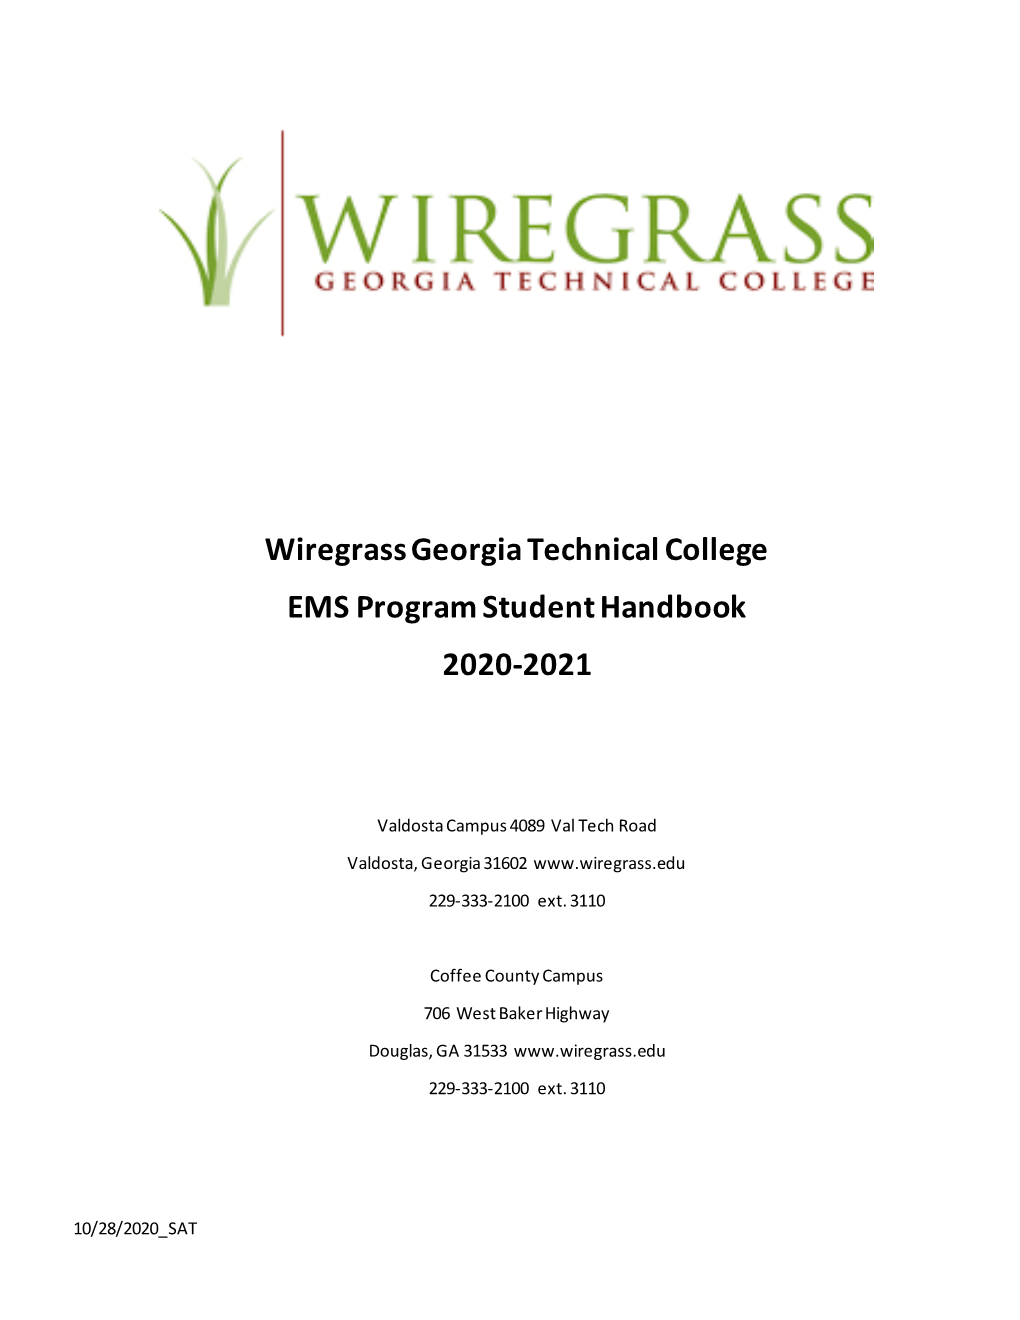 Wiregrass Georgia Technical College EMS Program Student Handbook 2020-2021